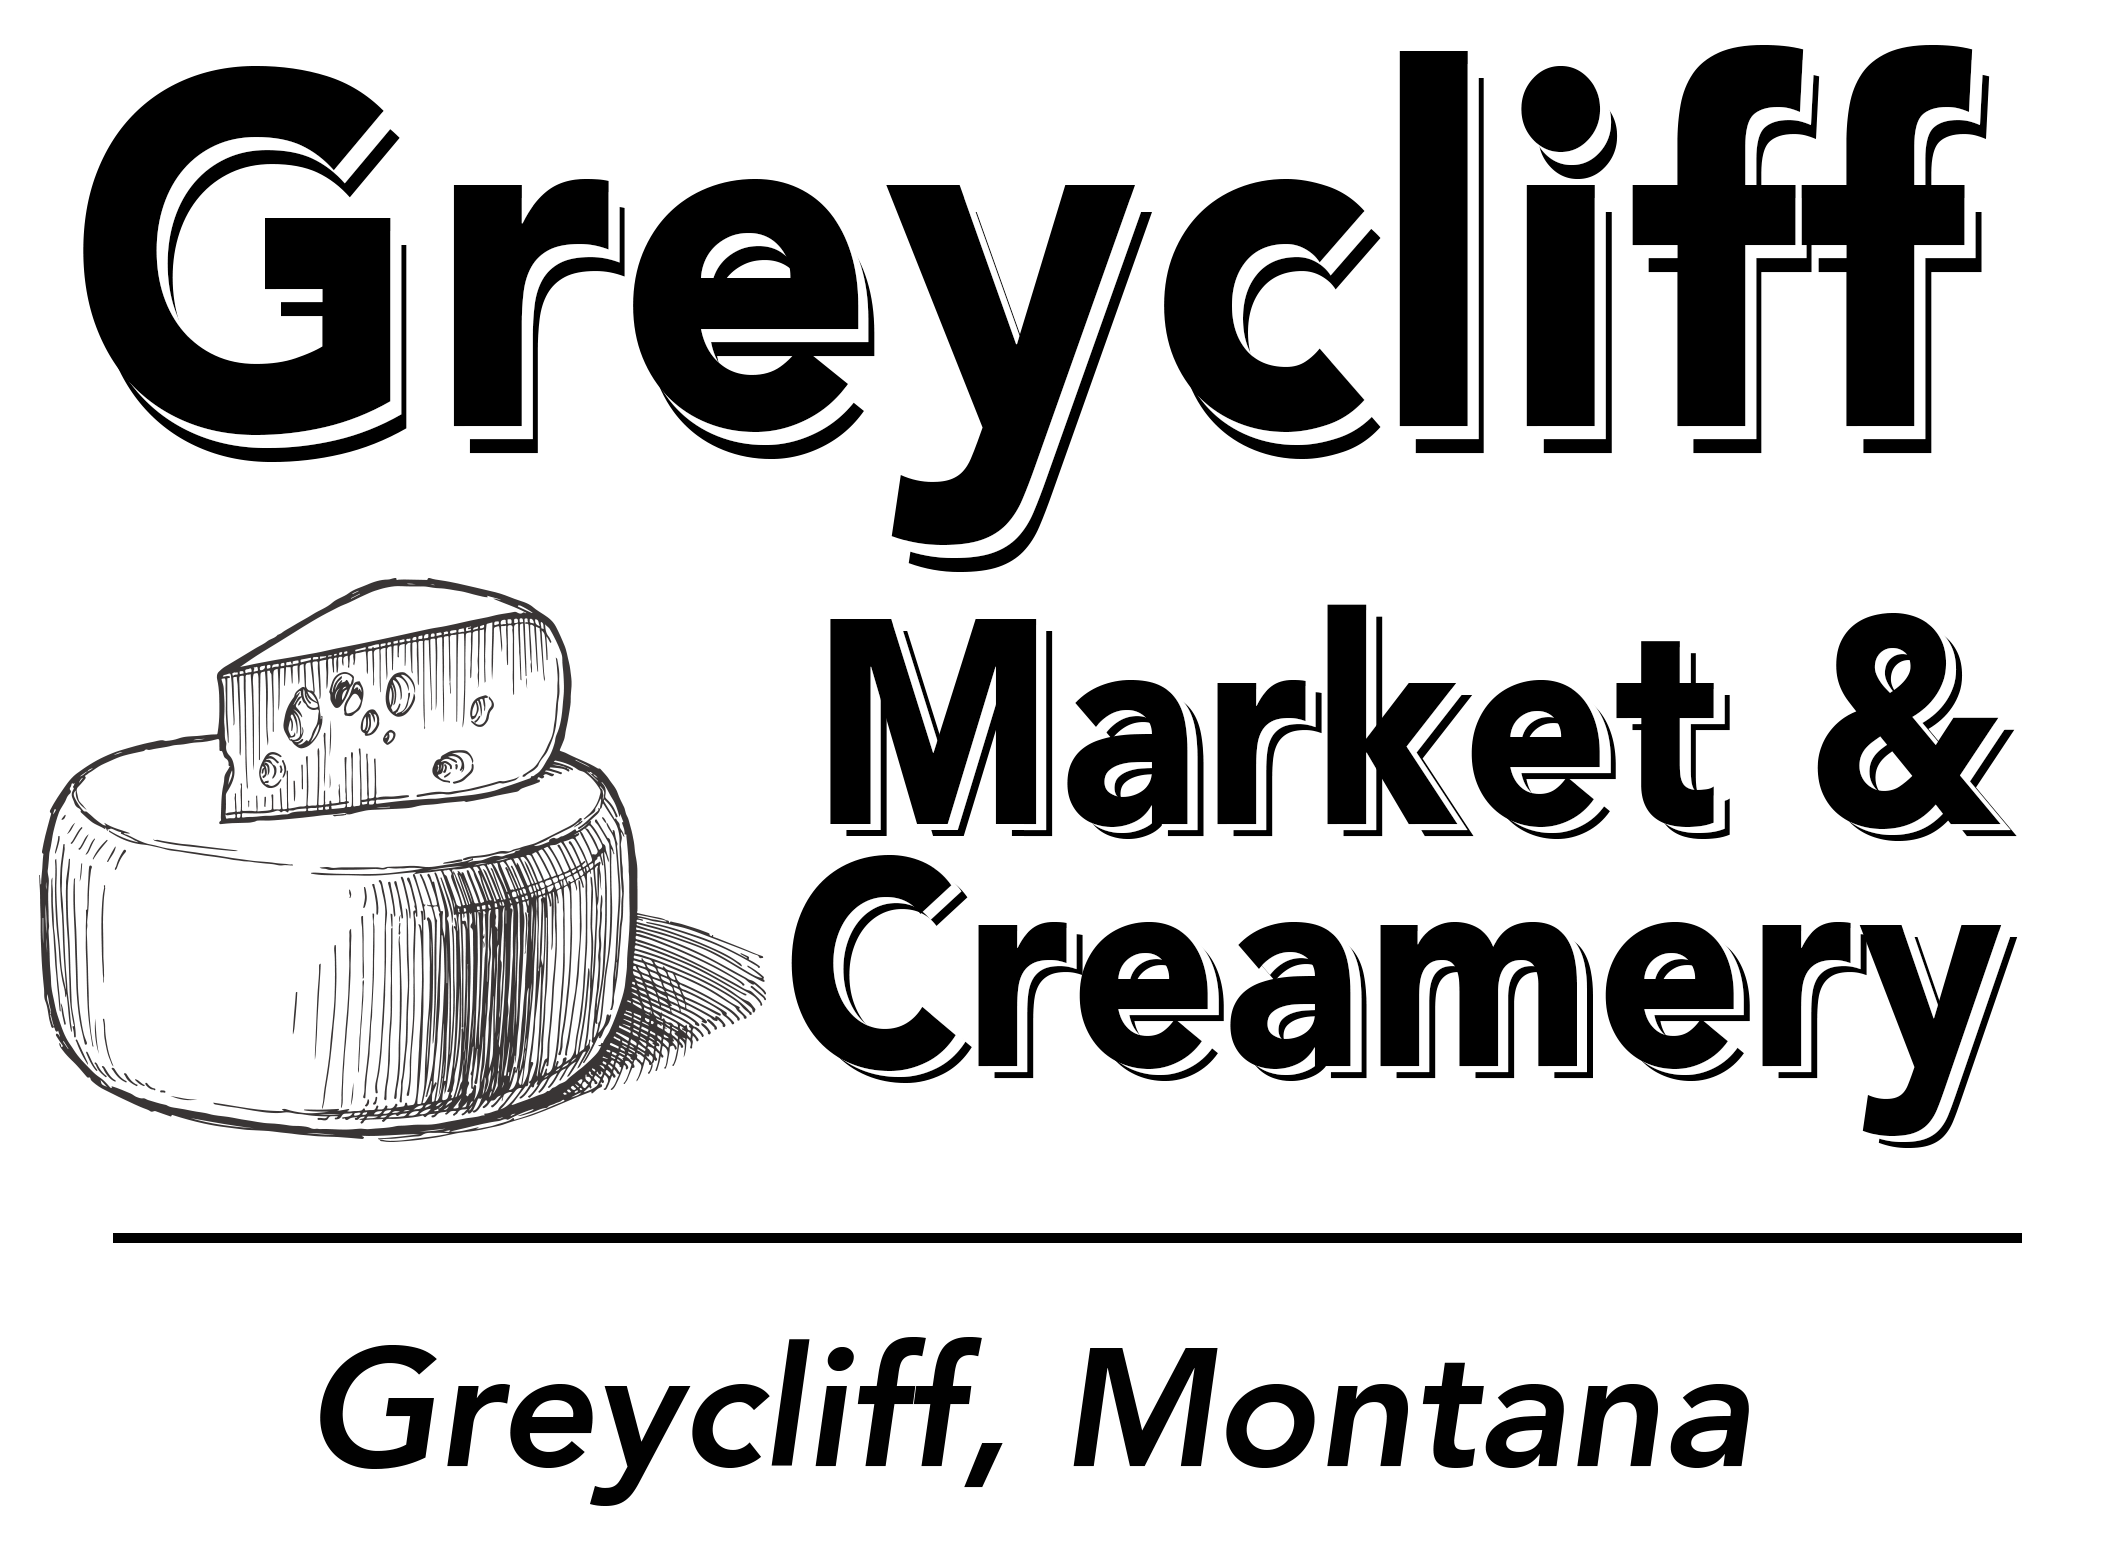 Greycliff Market